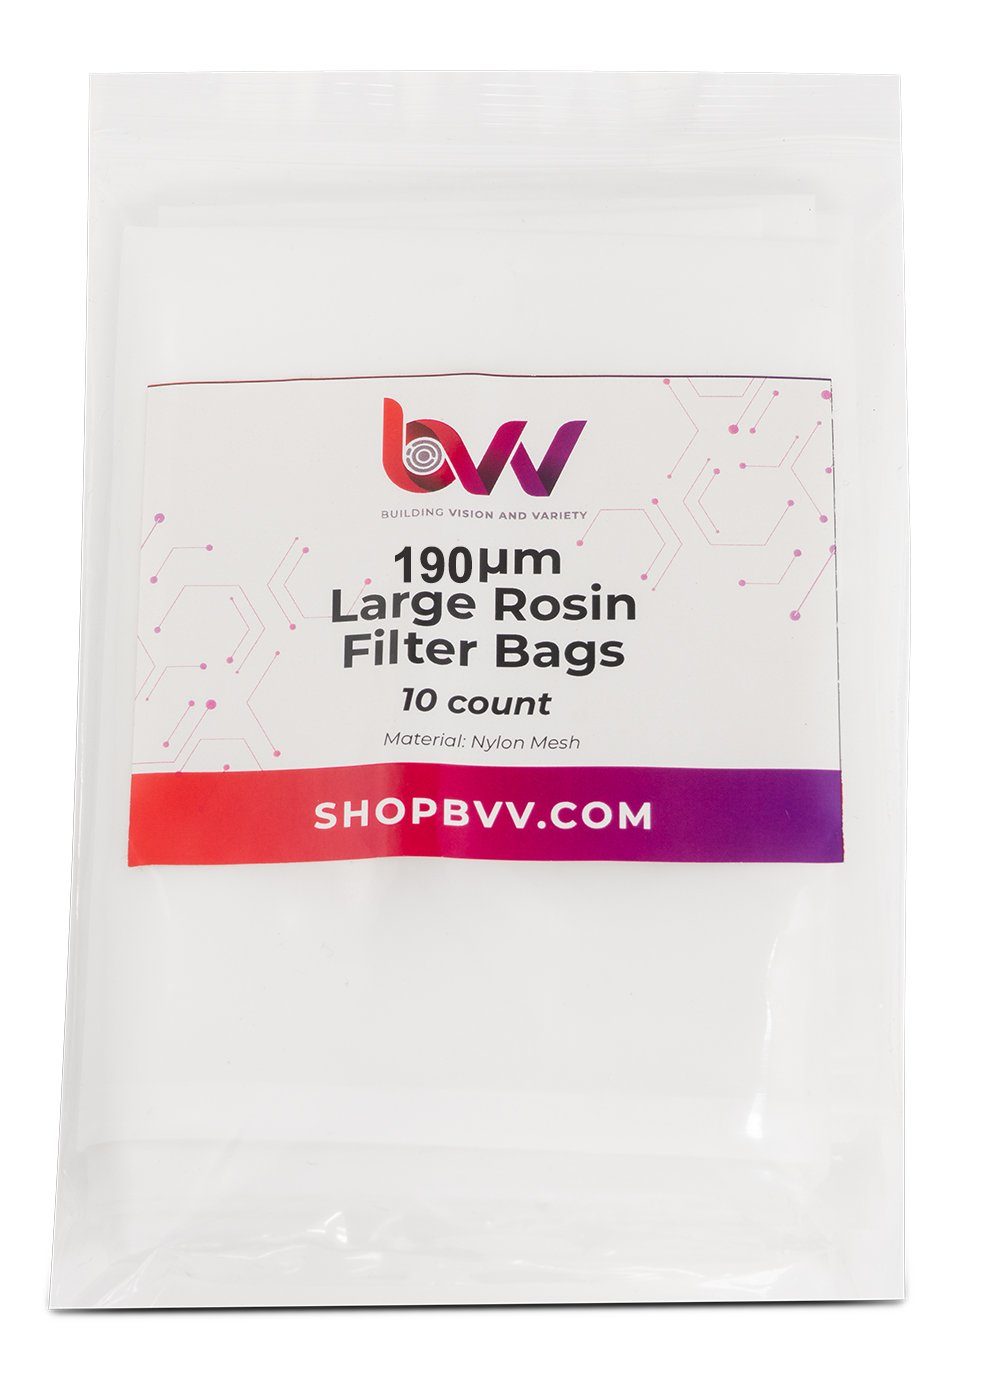 Large Rosin Filter Bags - 10 Pack Shop All Categories BVV 190